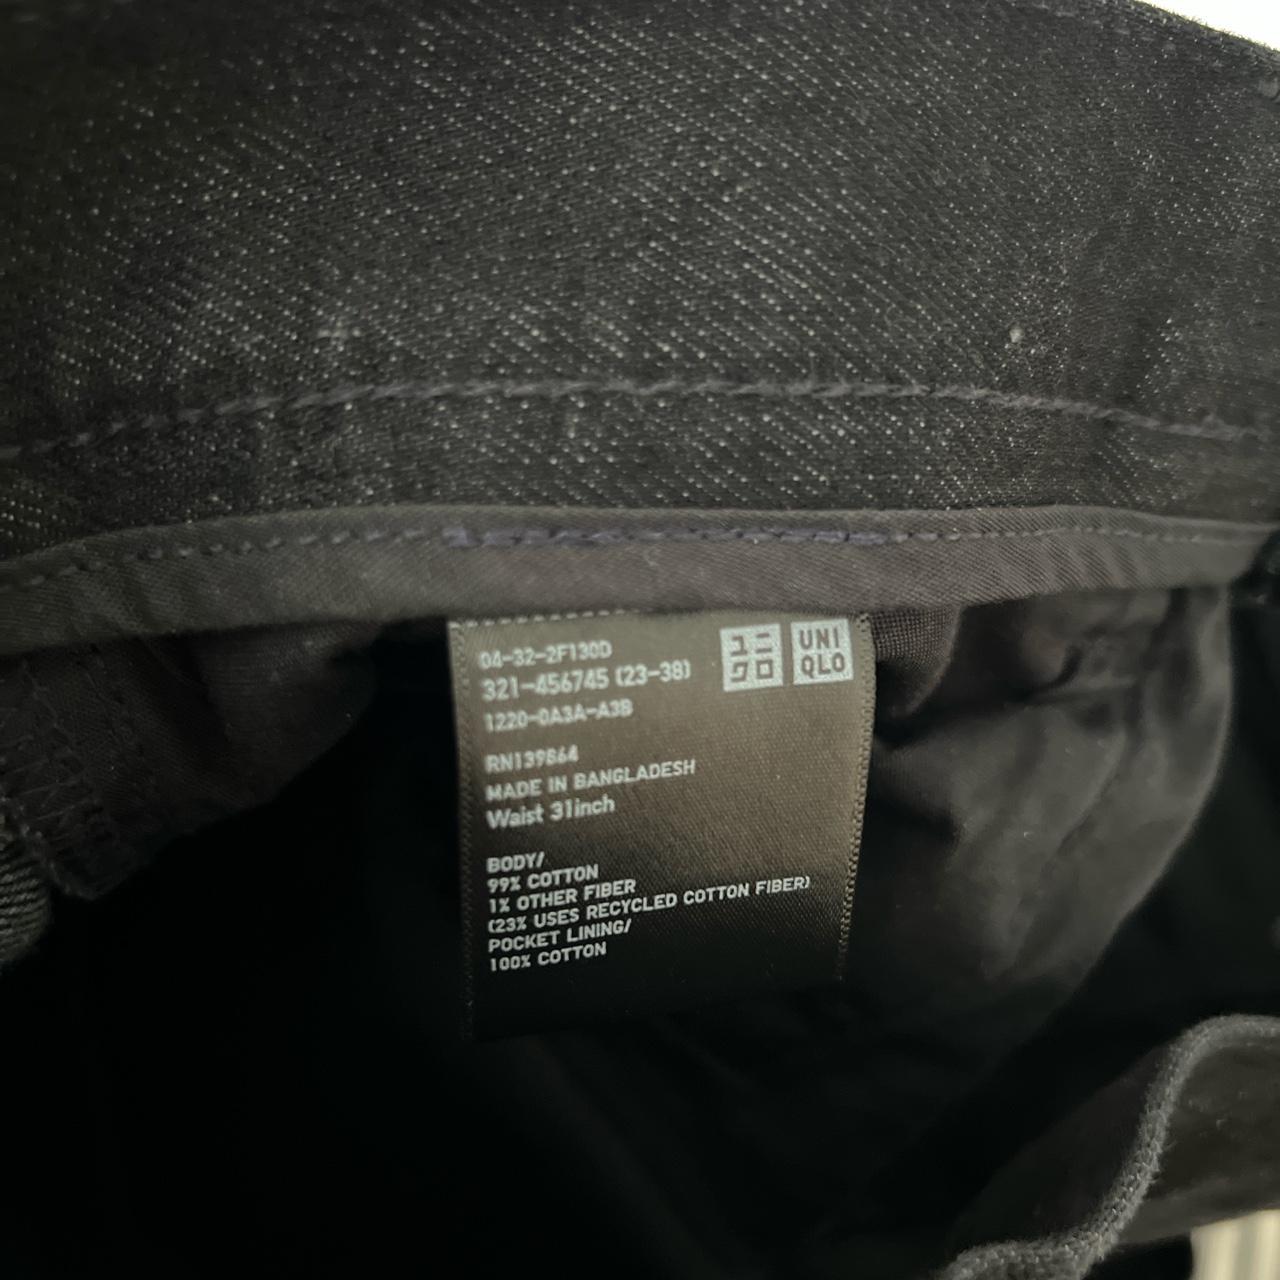 UNIQLO x Helmut Lang sweatshirt and sweatpants, Comme Ca Store